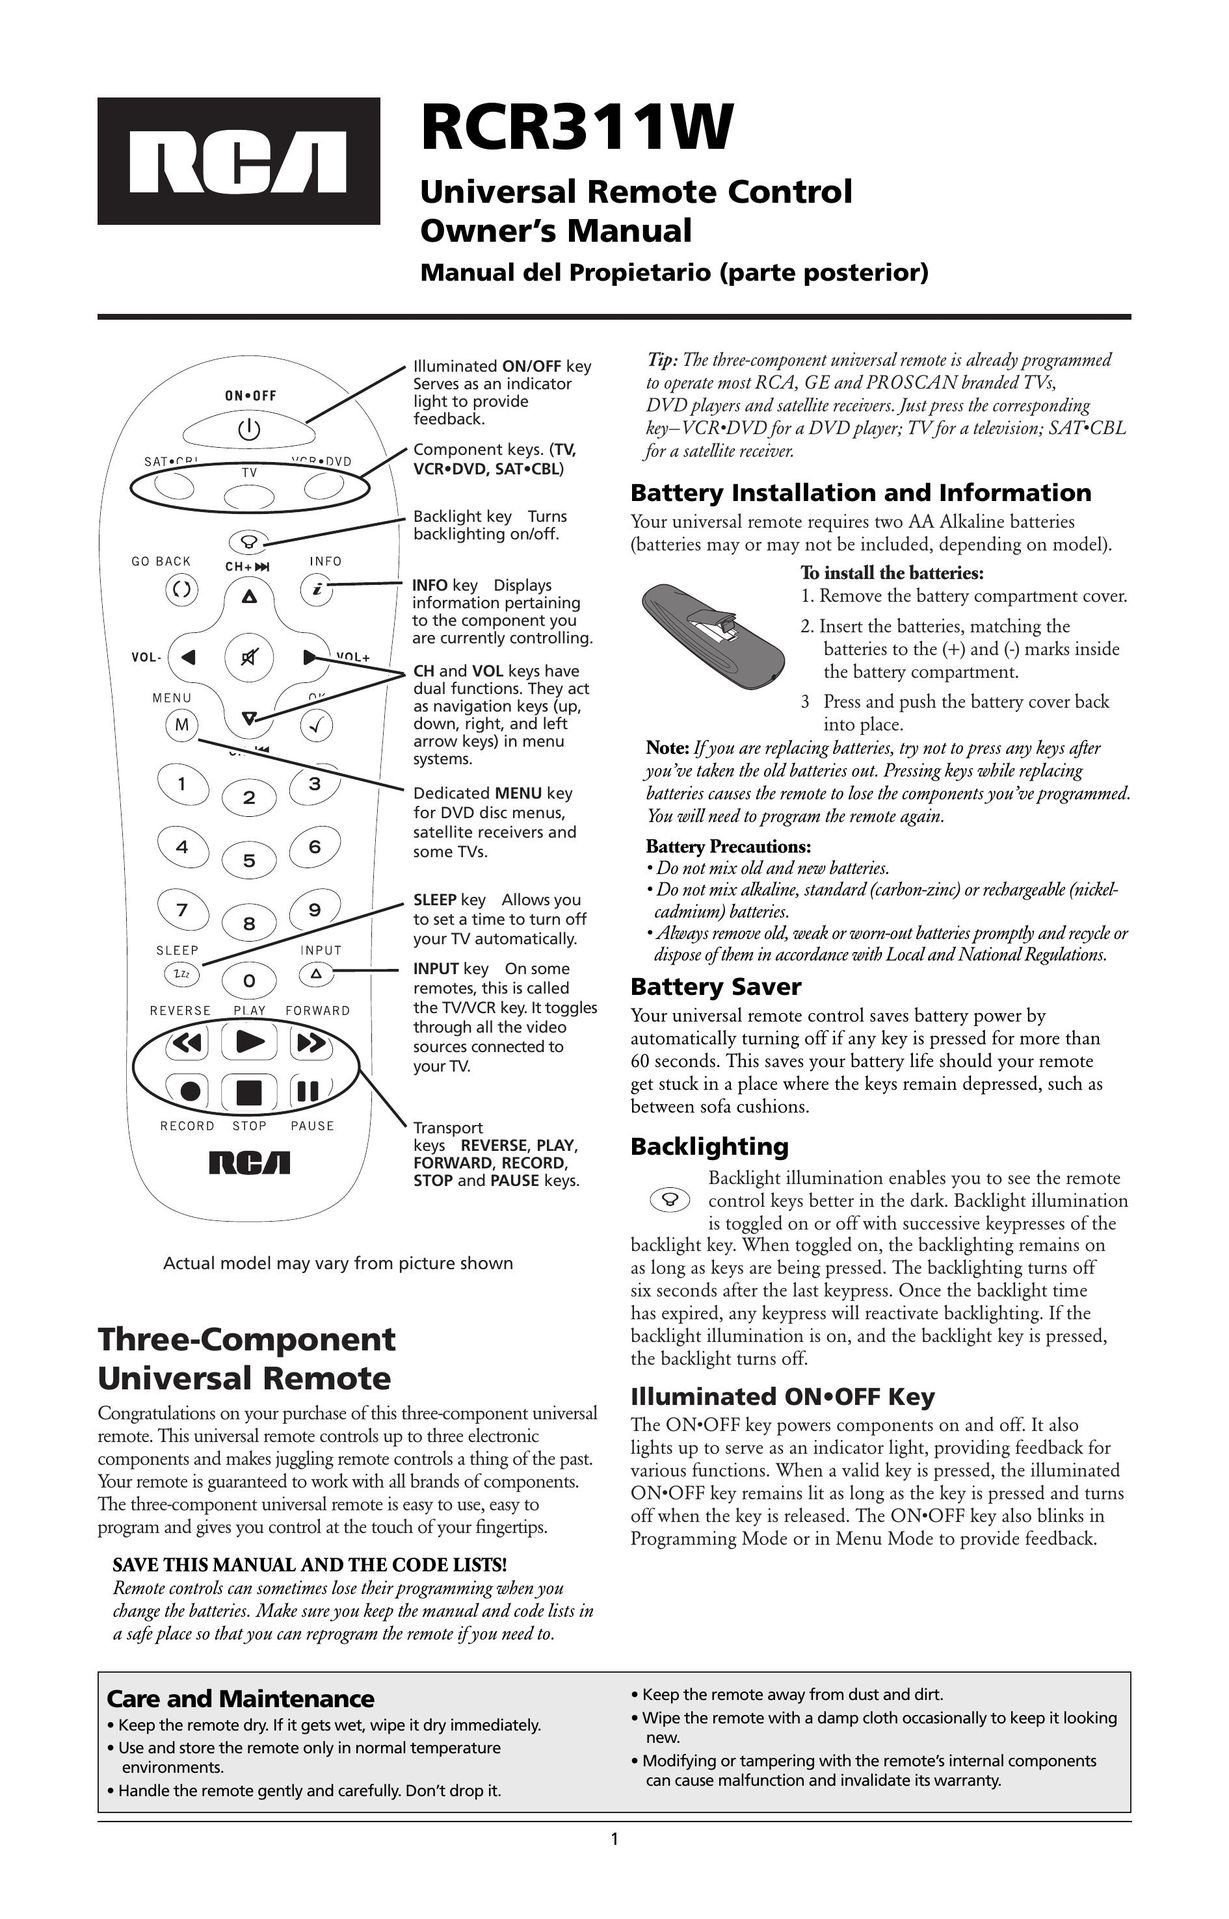 RCA RCR311W Universal Remote User Manual